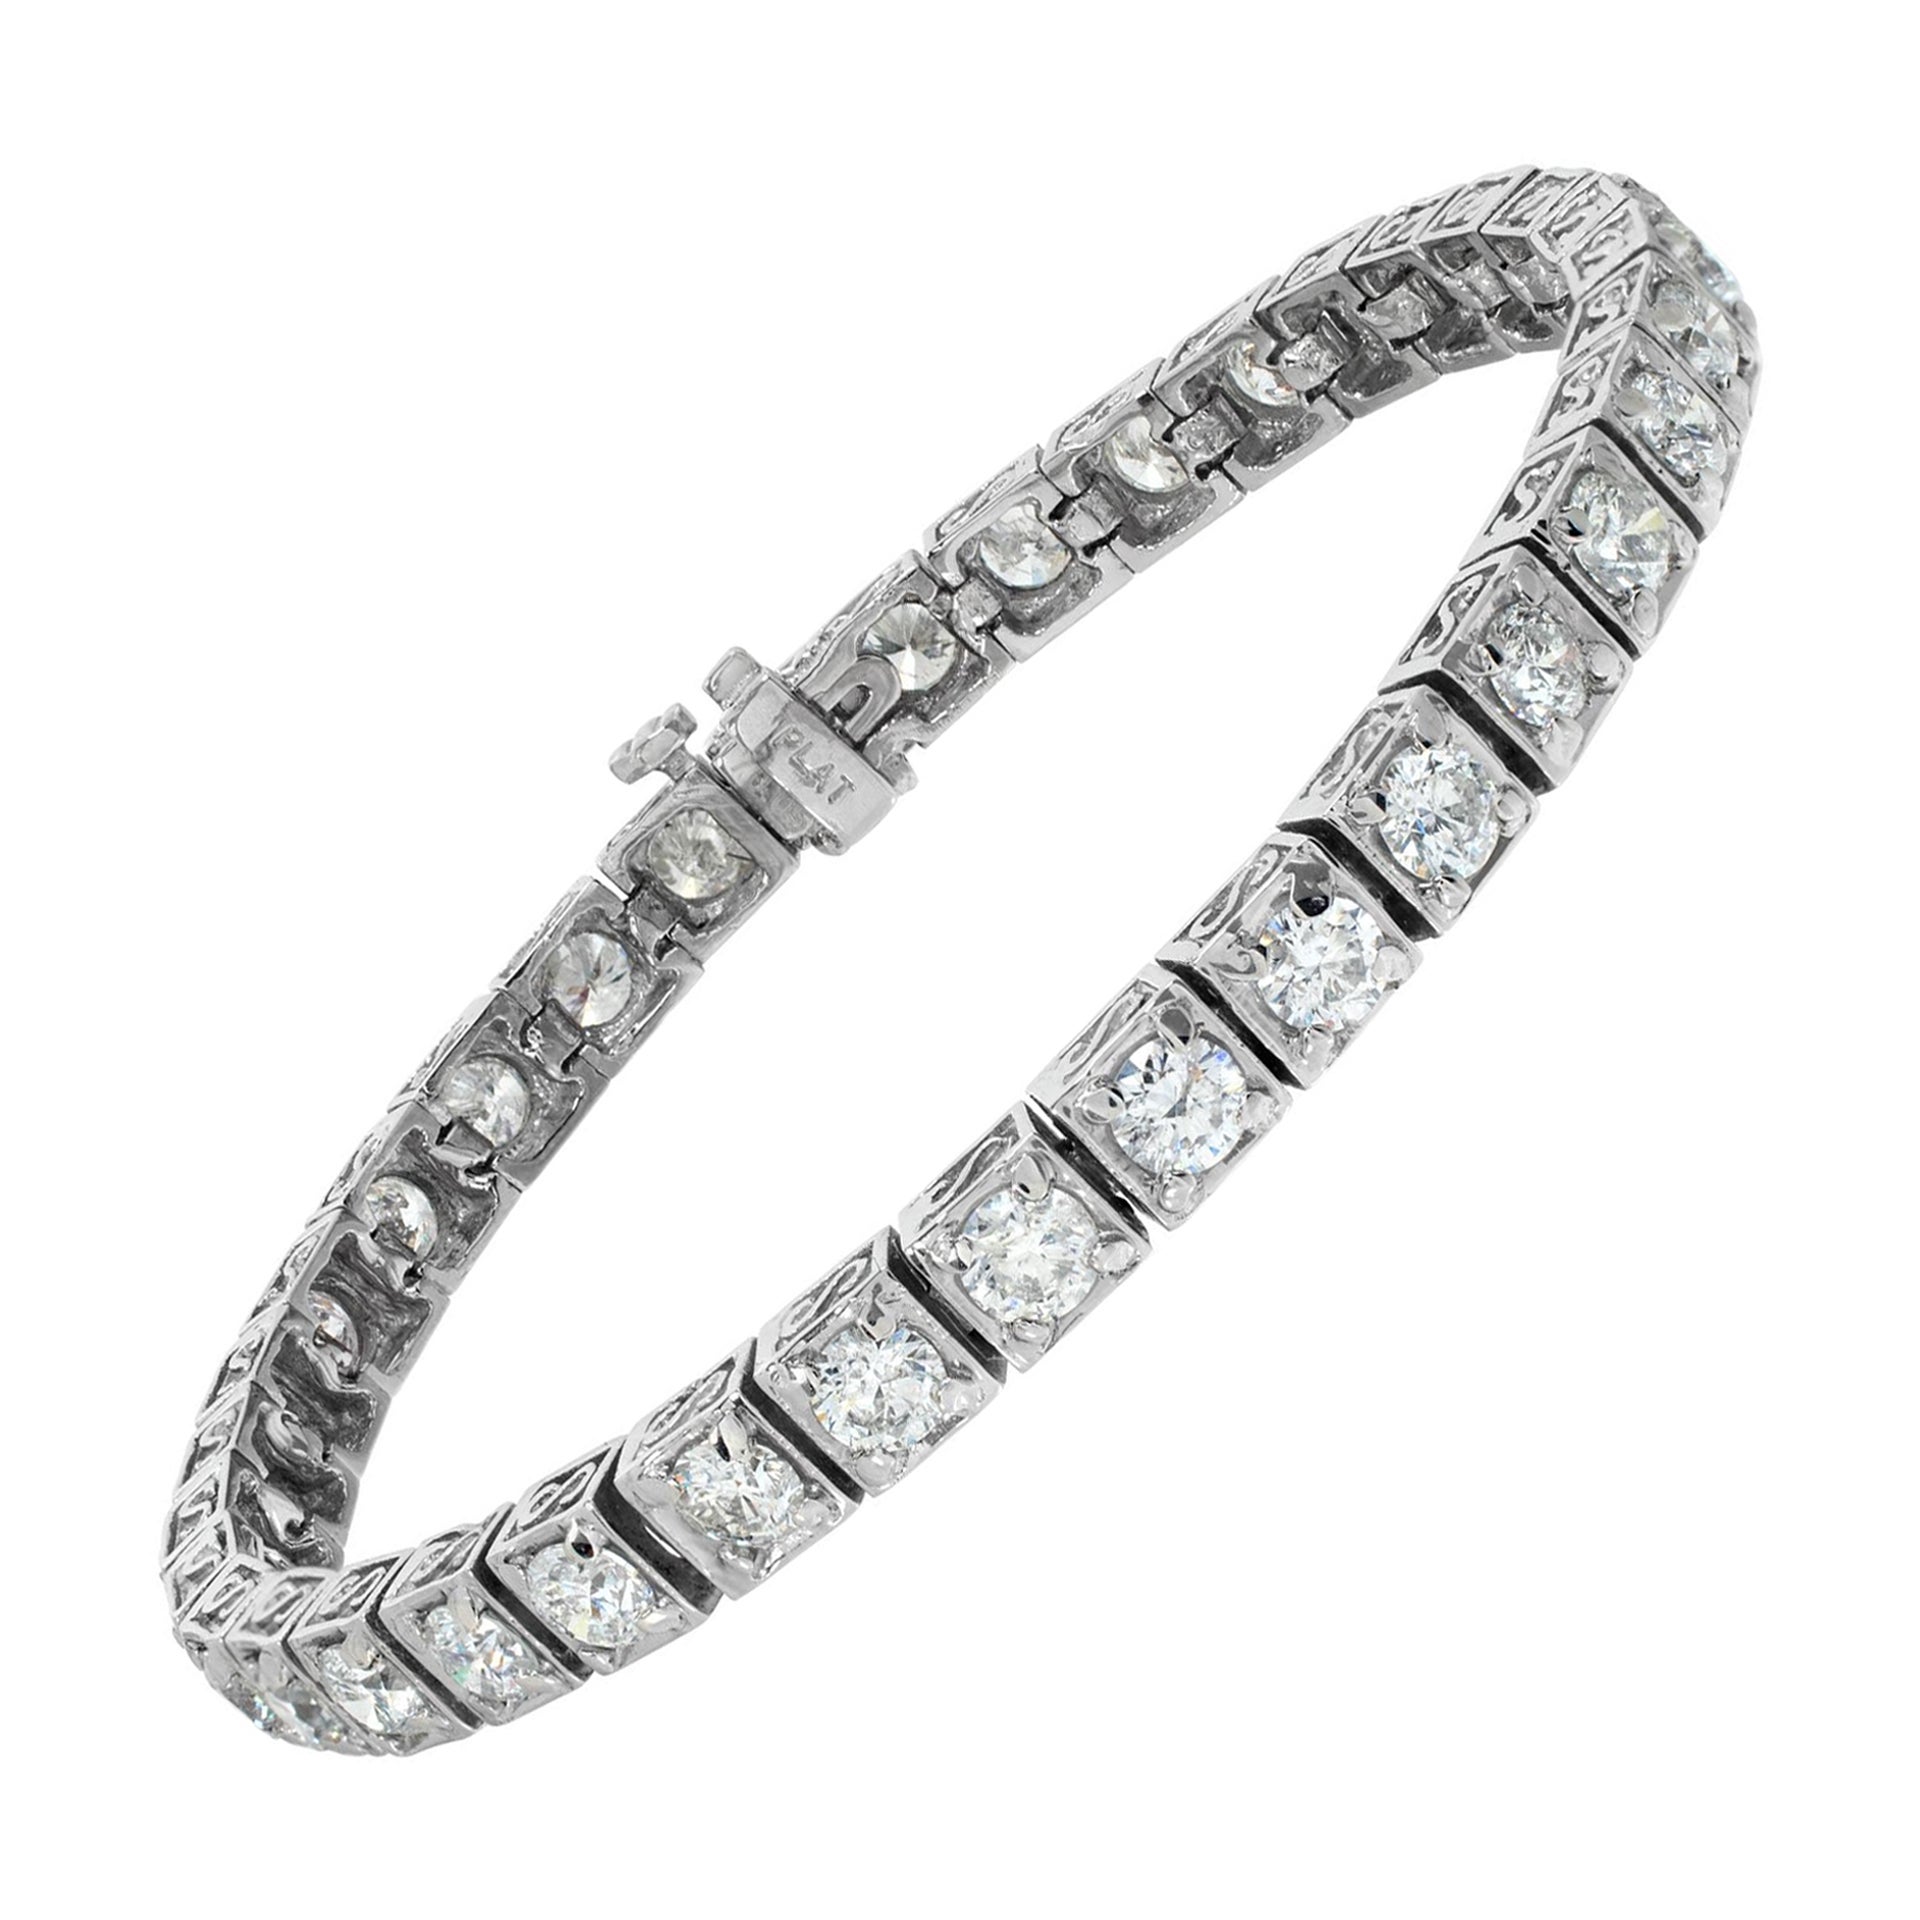 Platinum diamond bracelet w/ round brilliant cut diamonds set in 4 prong setting